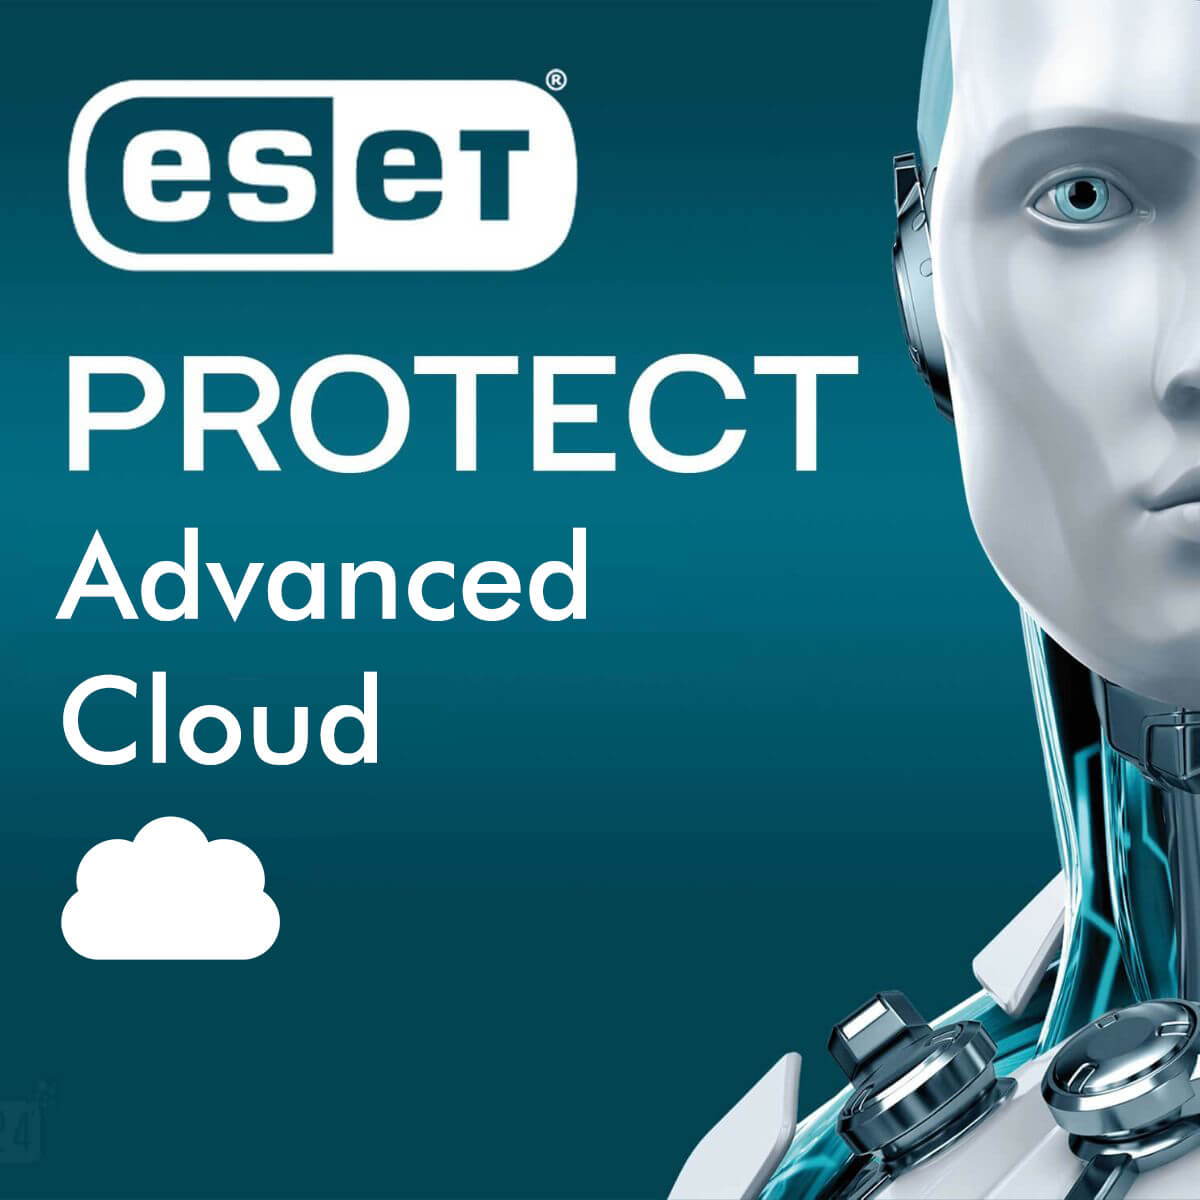 ESET Protect Advanced Cloud (Academic/ Non-Profit/ Gov) 1-Year Subscription License